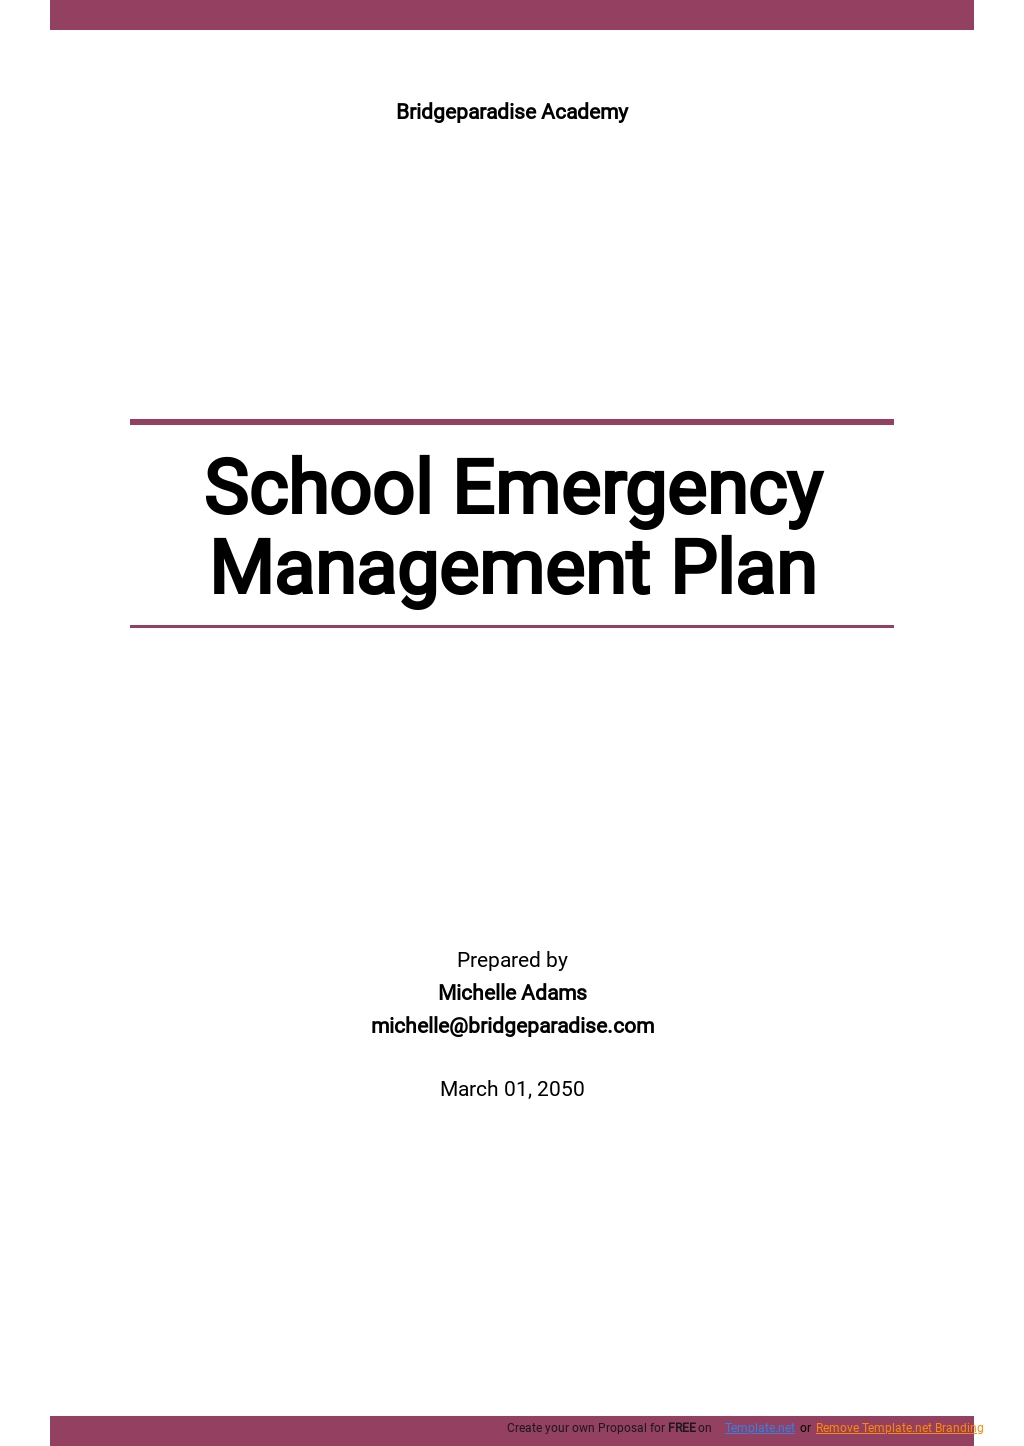 School Emergency Management Plan Template.jpe